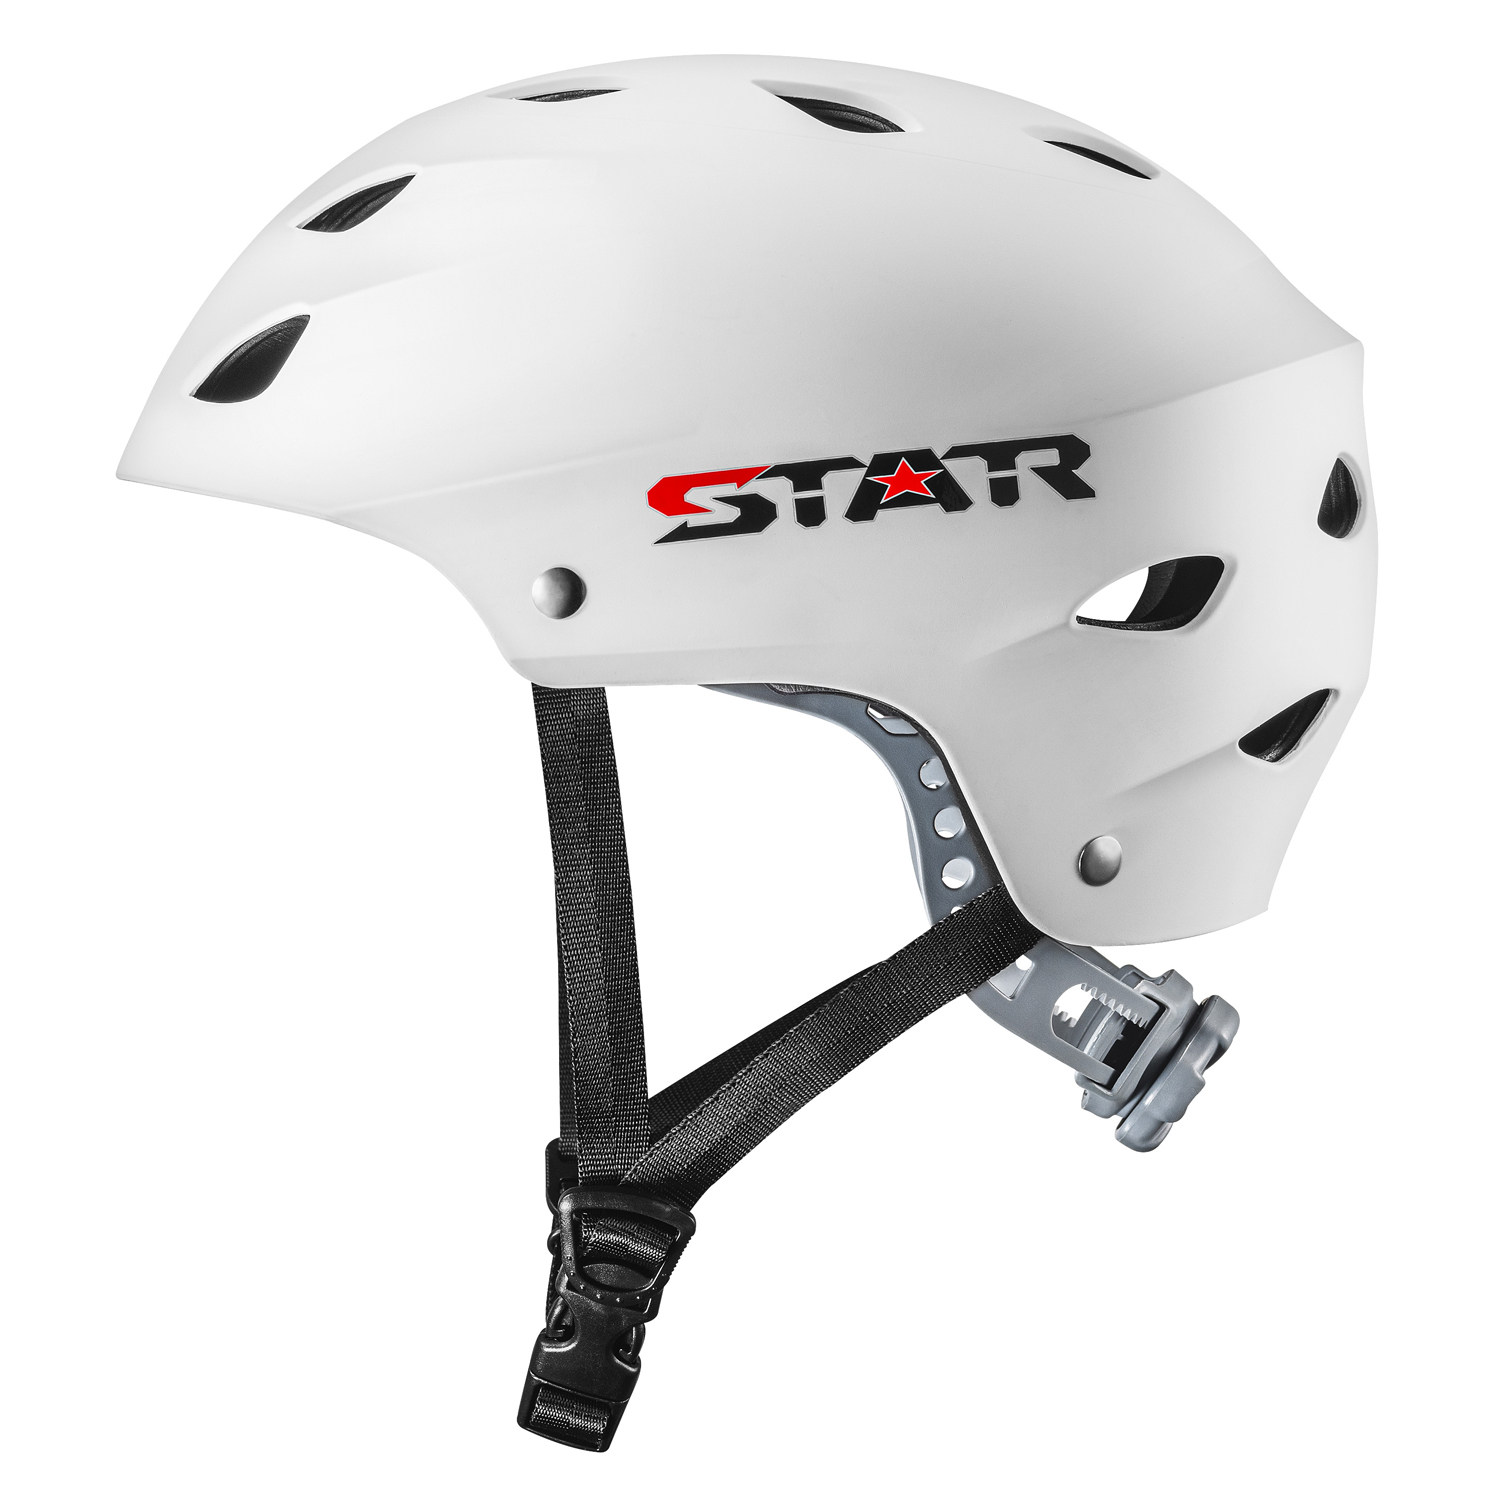 WH-17 Water Sport Helmet with earpad